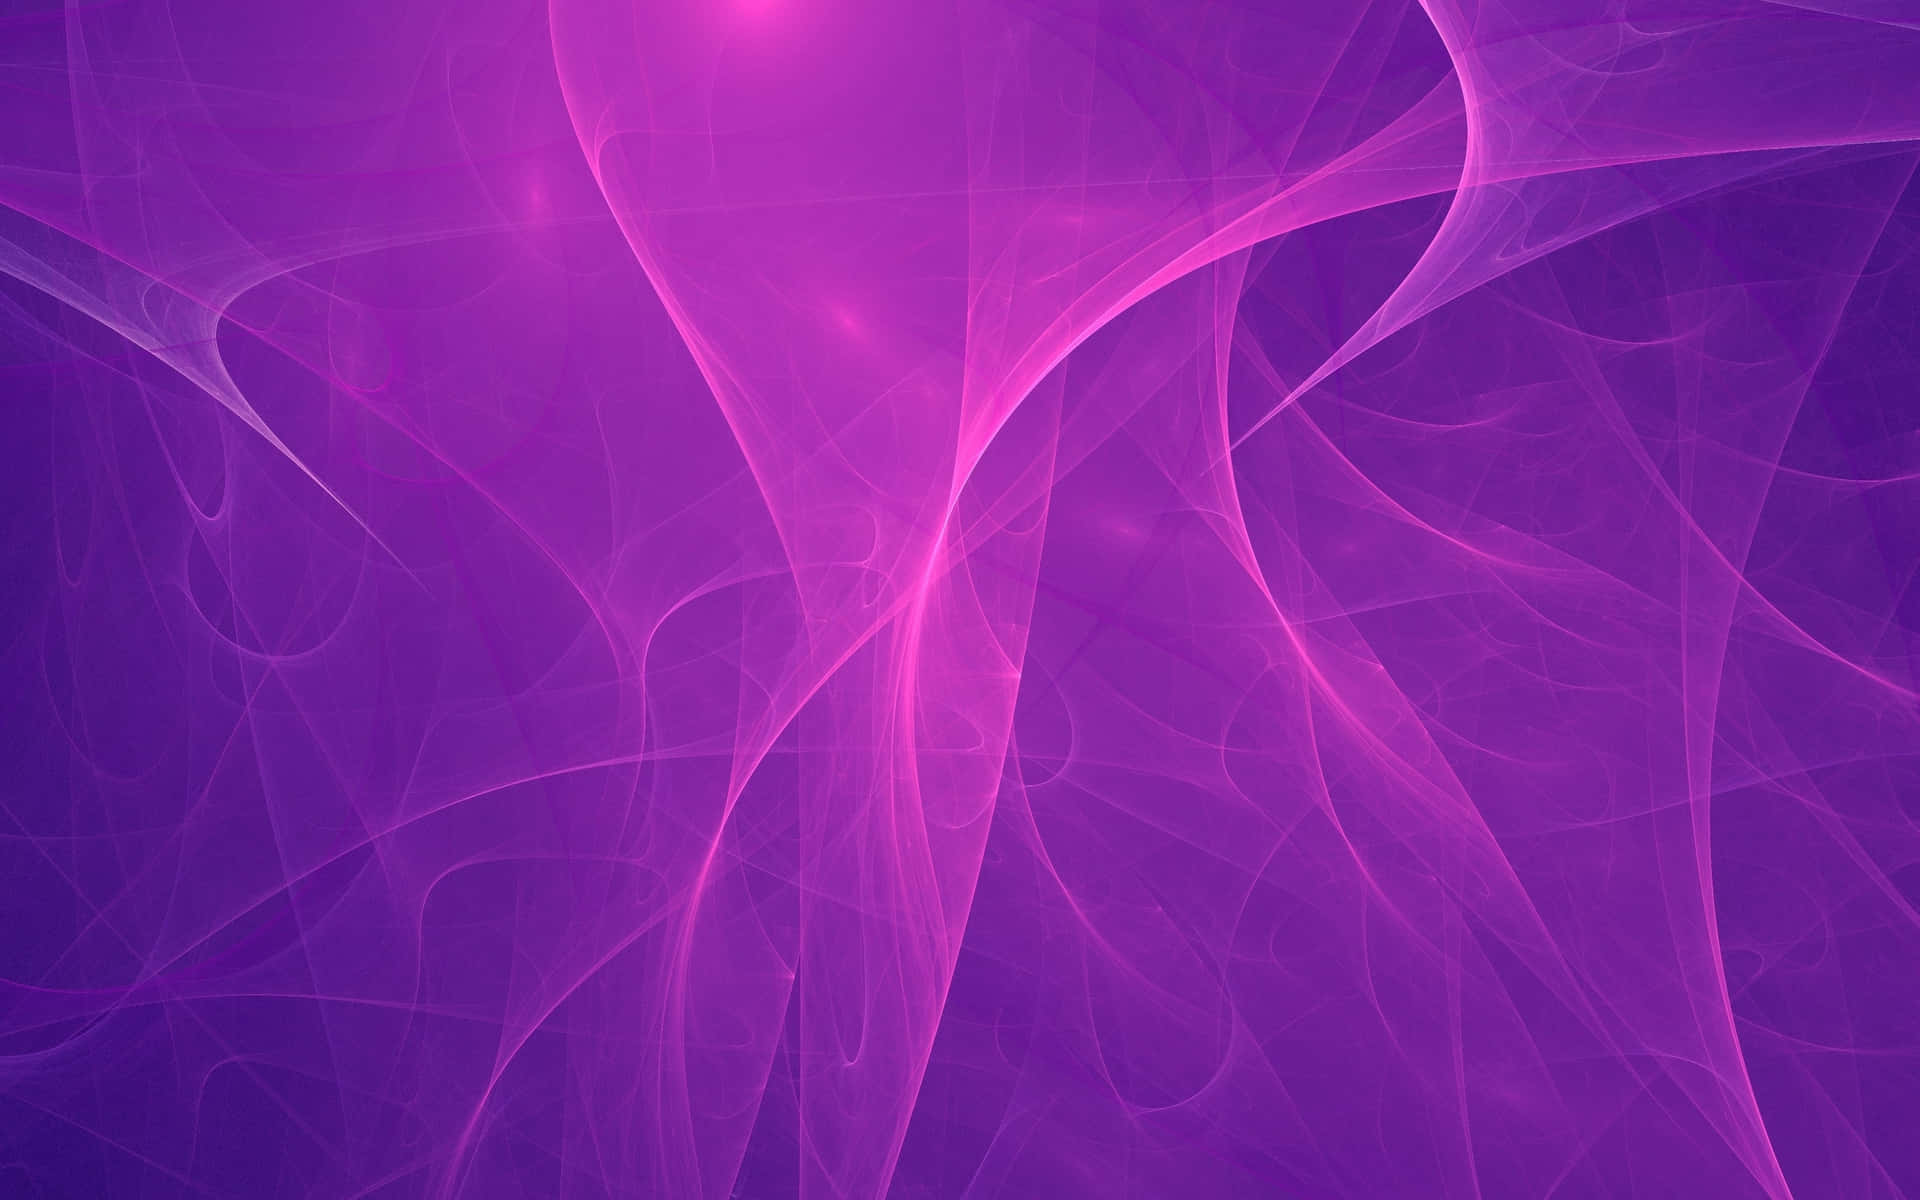 Soft Purple Waves GFX Background